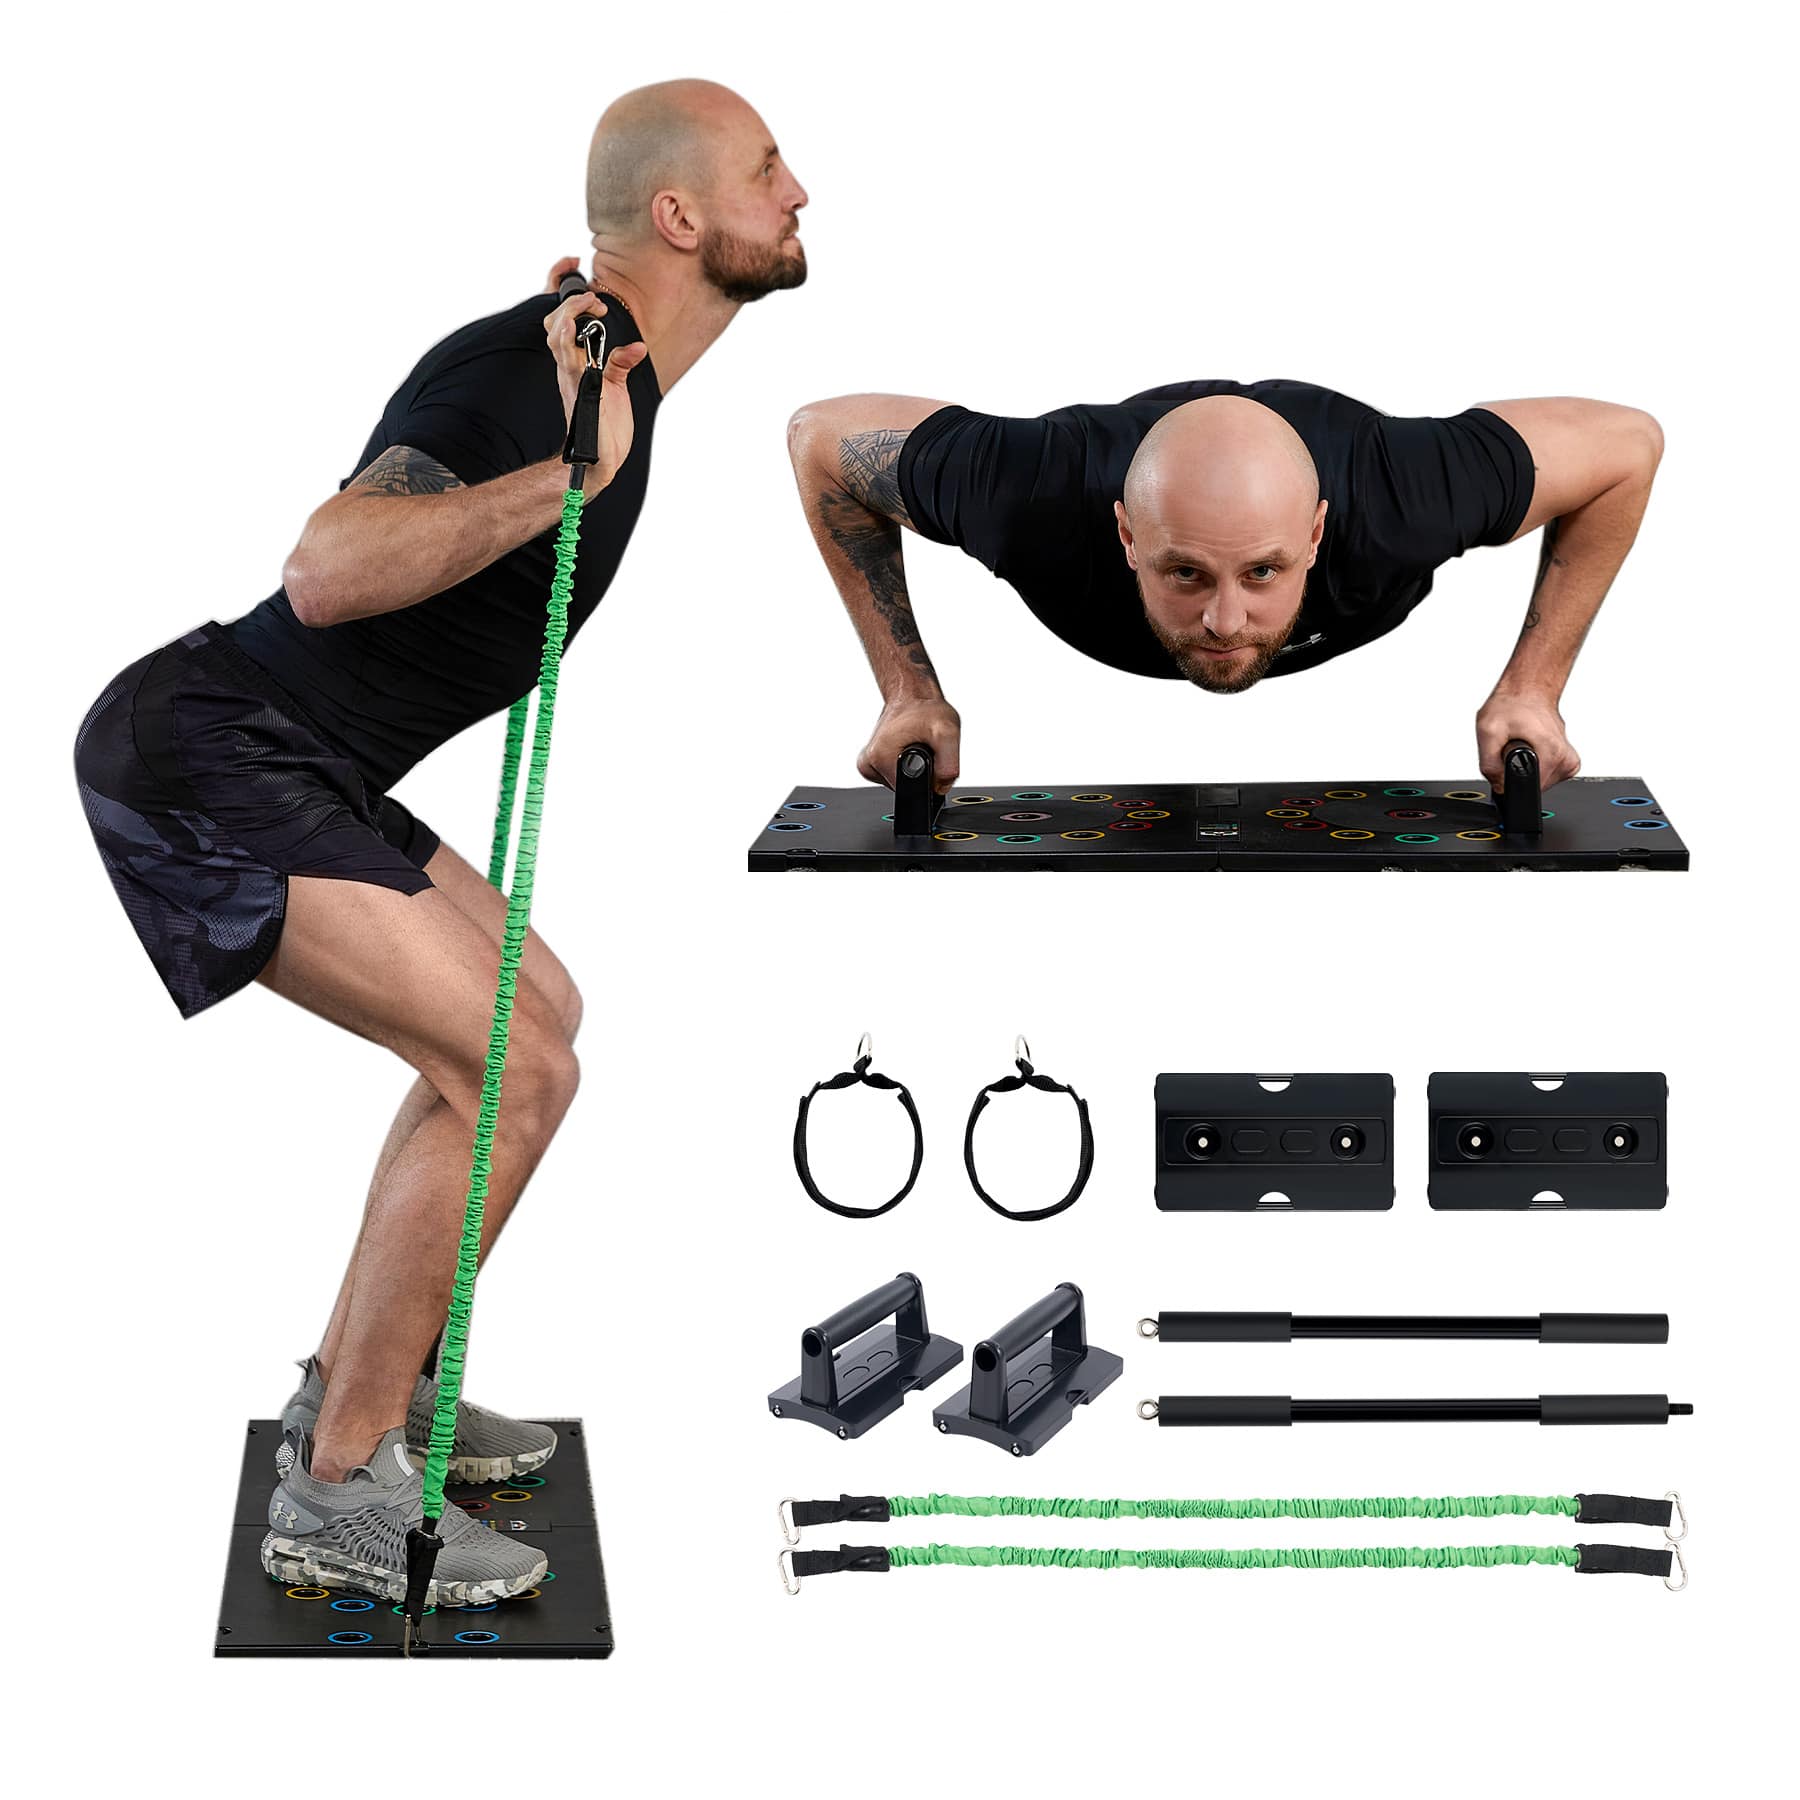 14 Portable Home Gym Workout Set, Equipment for Cardio Strength Training